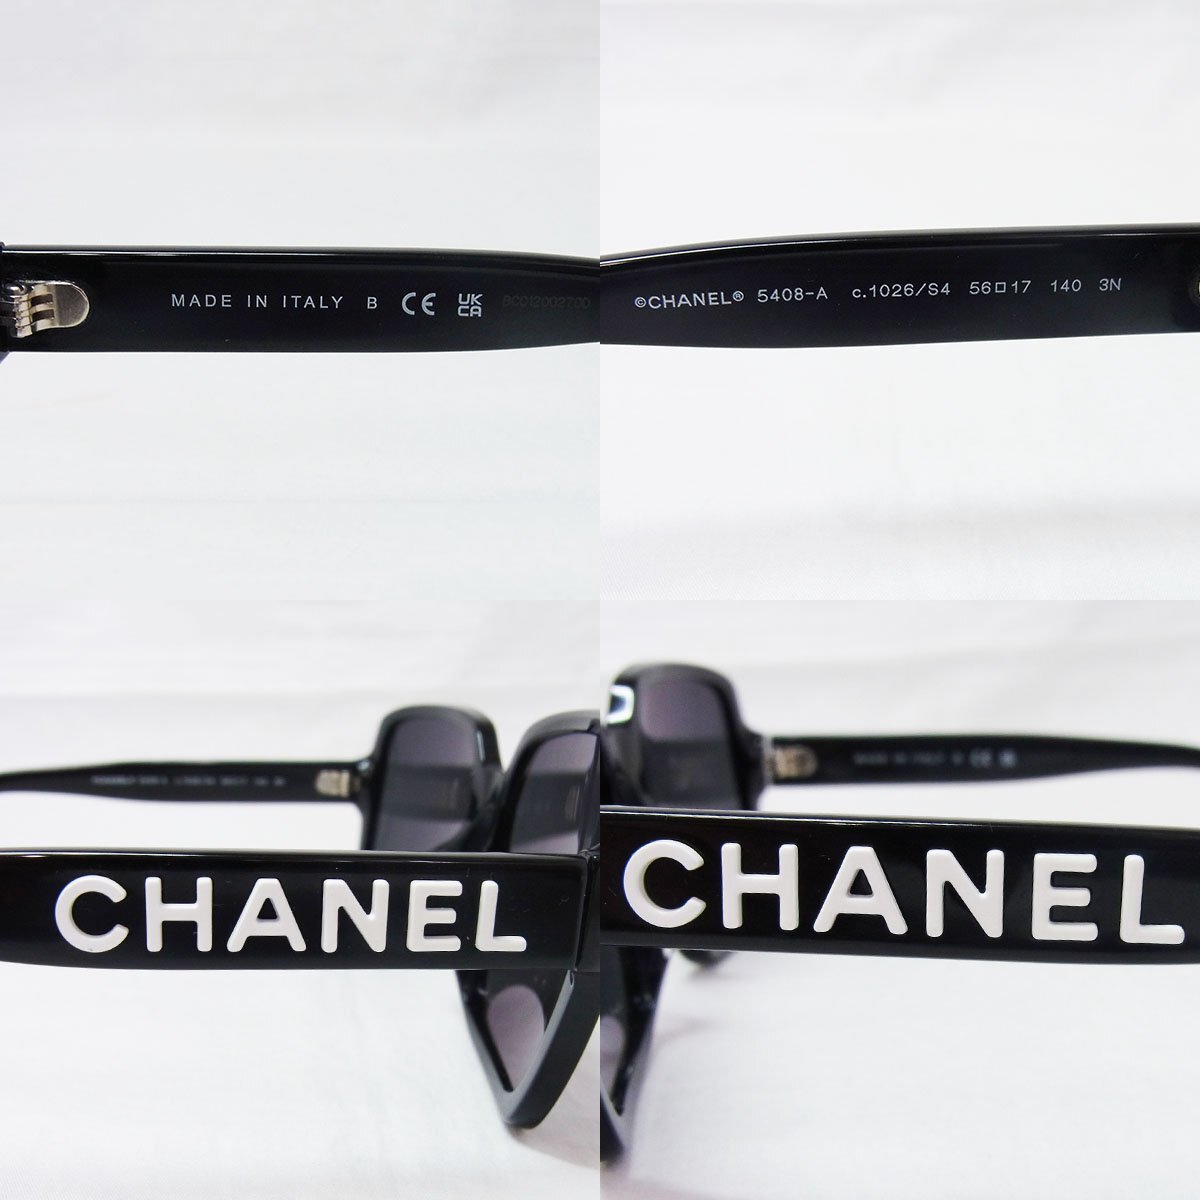  Chanel sunglasses 5408-A Chanel Logo black black black group lens CHANEL +